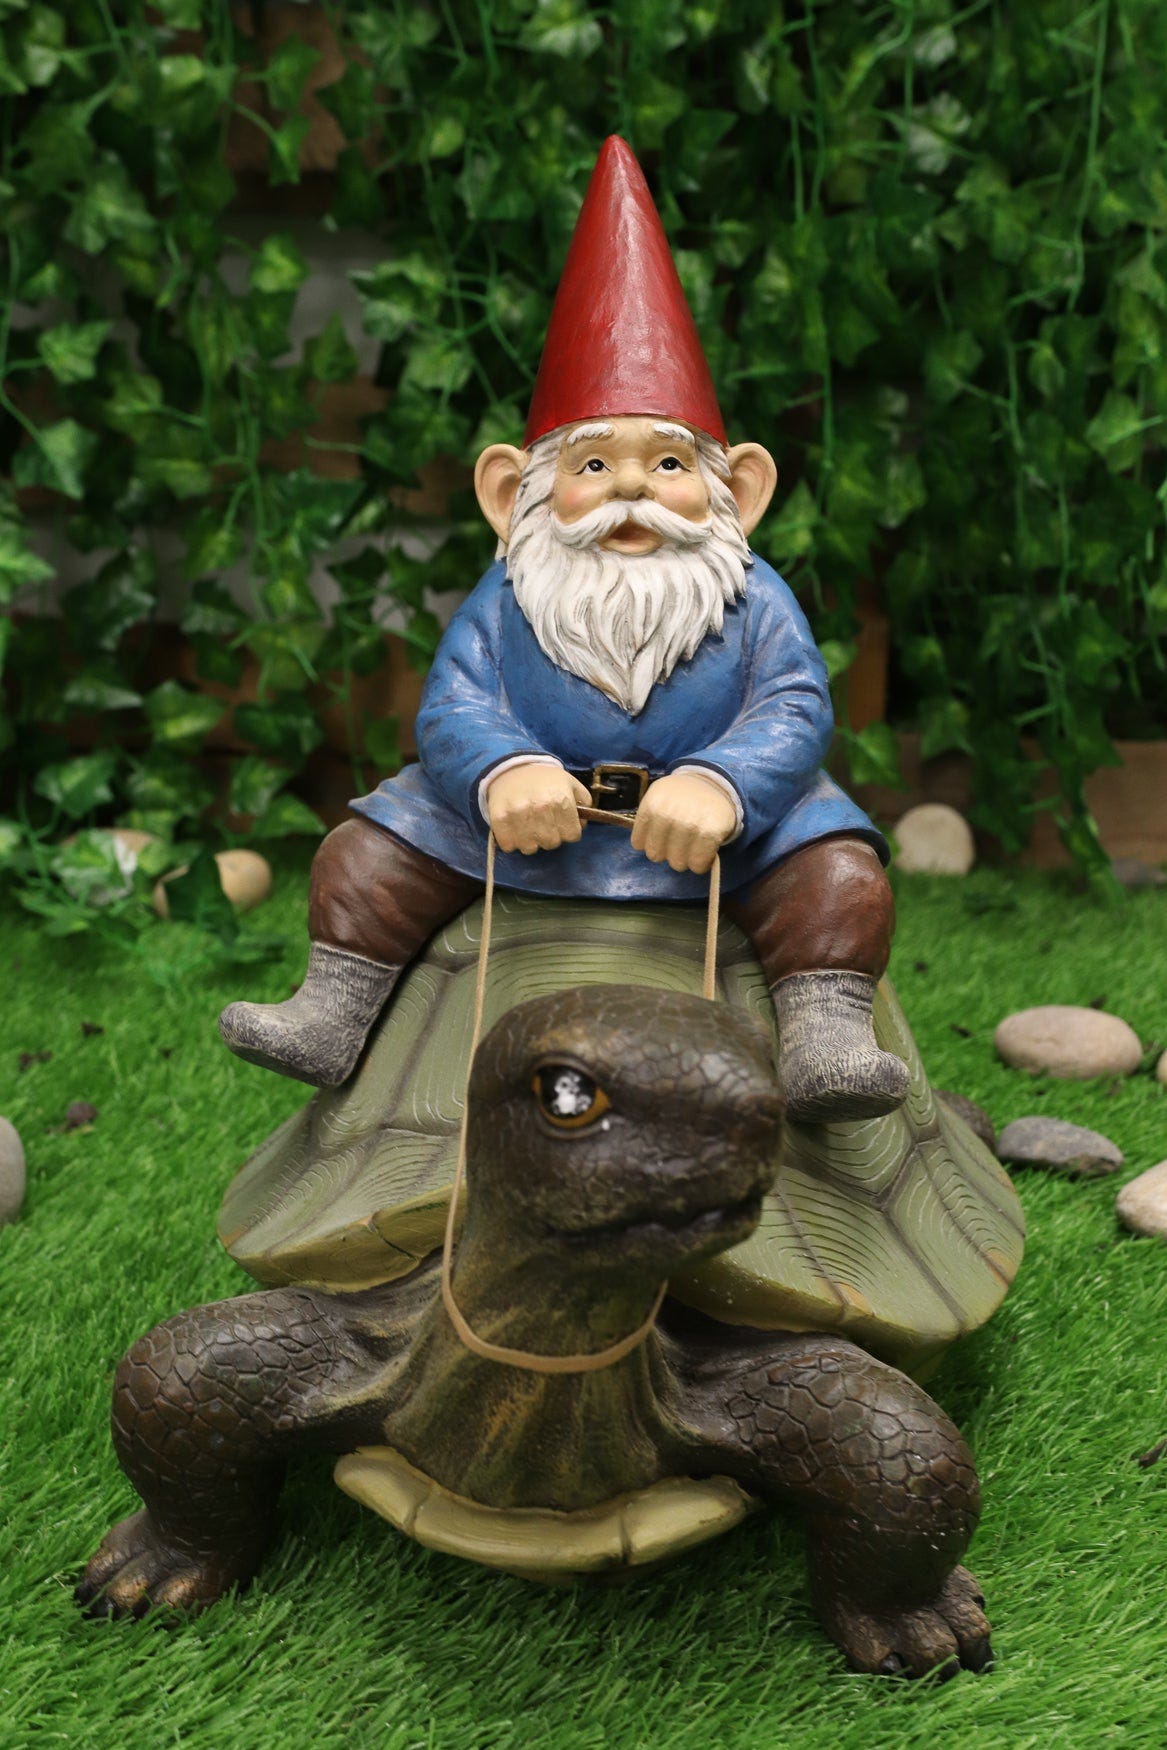 Ebros Gift Large Whimsical Mr. Gnome Riding Faithful Giant Turtle Garden Statue 17.25" Long